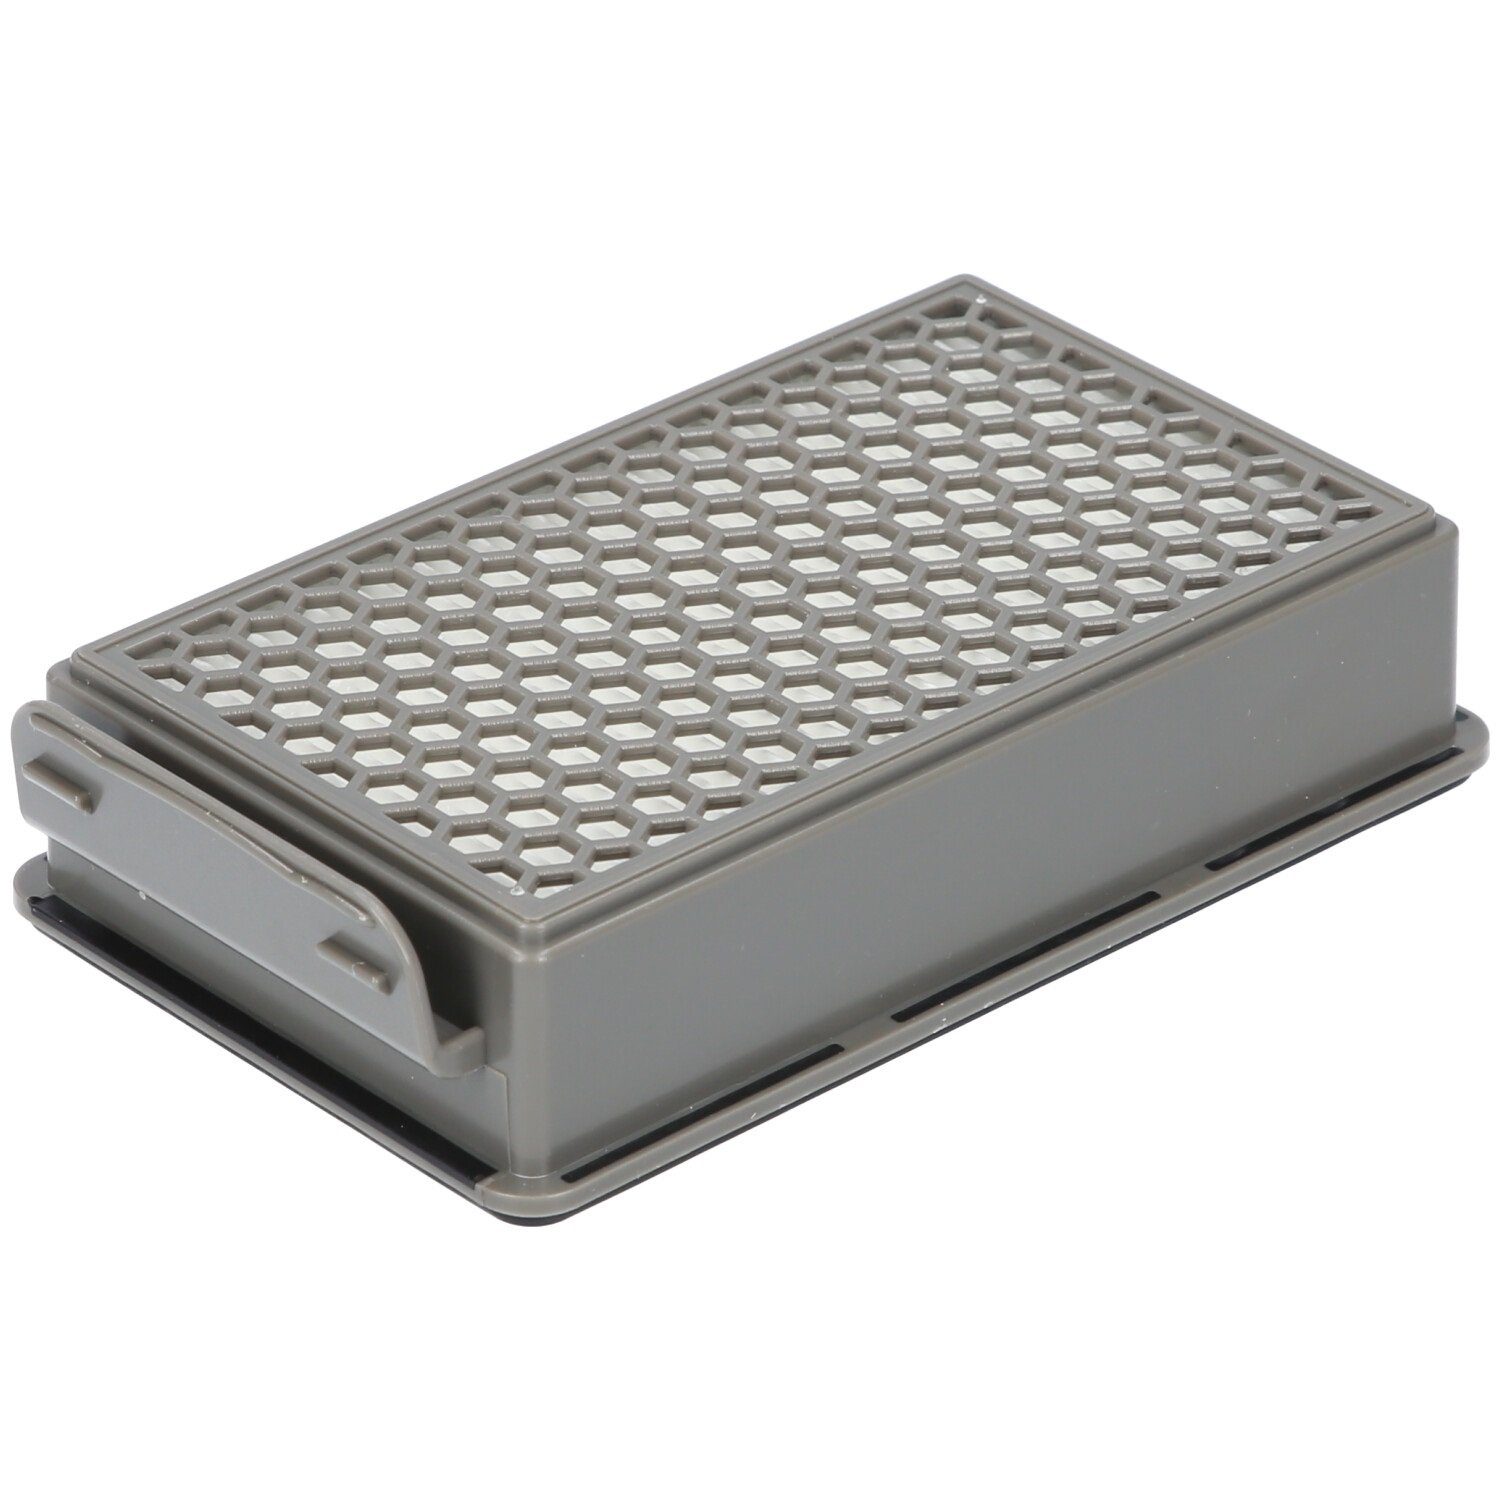 MO3786PA, geeignet 1x / für ZR005901 Filter-Set Alternativ MO3751PA McFilter 1x / / Moulinex MO3723PA Filterkassette, für MO3718PA MO3774PA, Rundfilter,